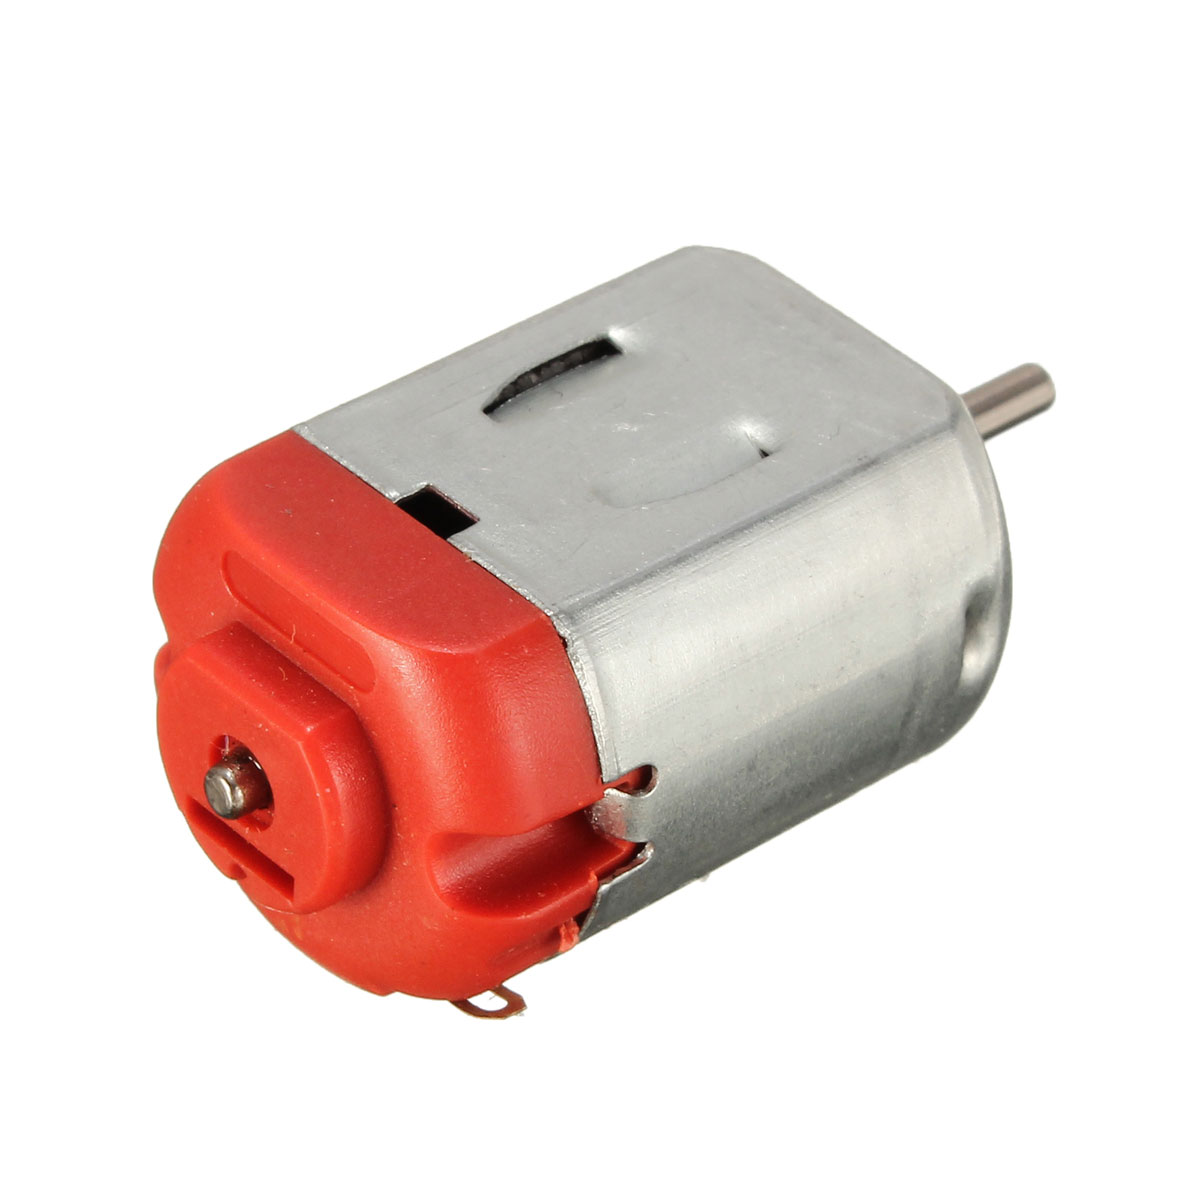 5PCS NEW R130 motor Type 130 Hobby micro motors 3-6V DC 0.35-0.4A 8000 RPM 